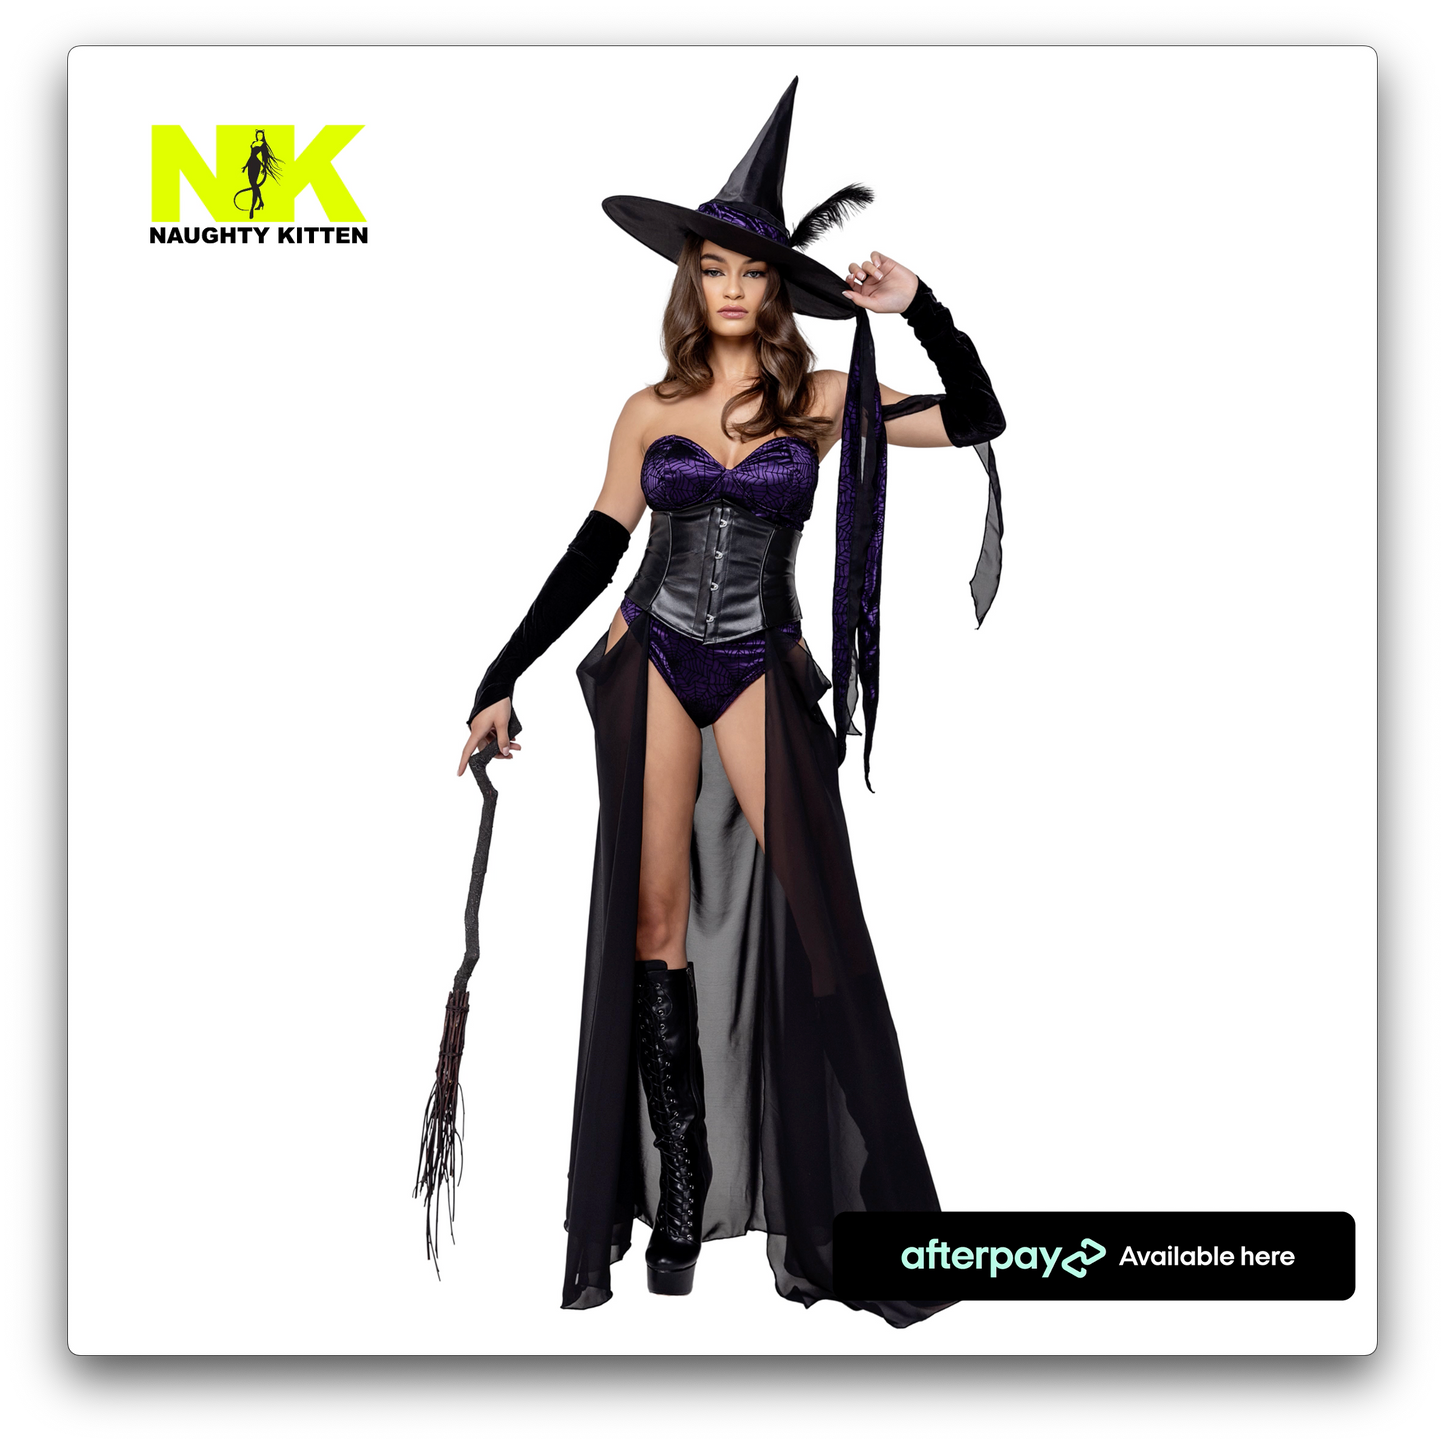 Naughty Kitten Clothing Dark Spell Seductress Costume Front View Halloween Costume